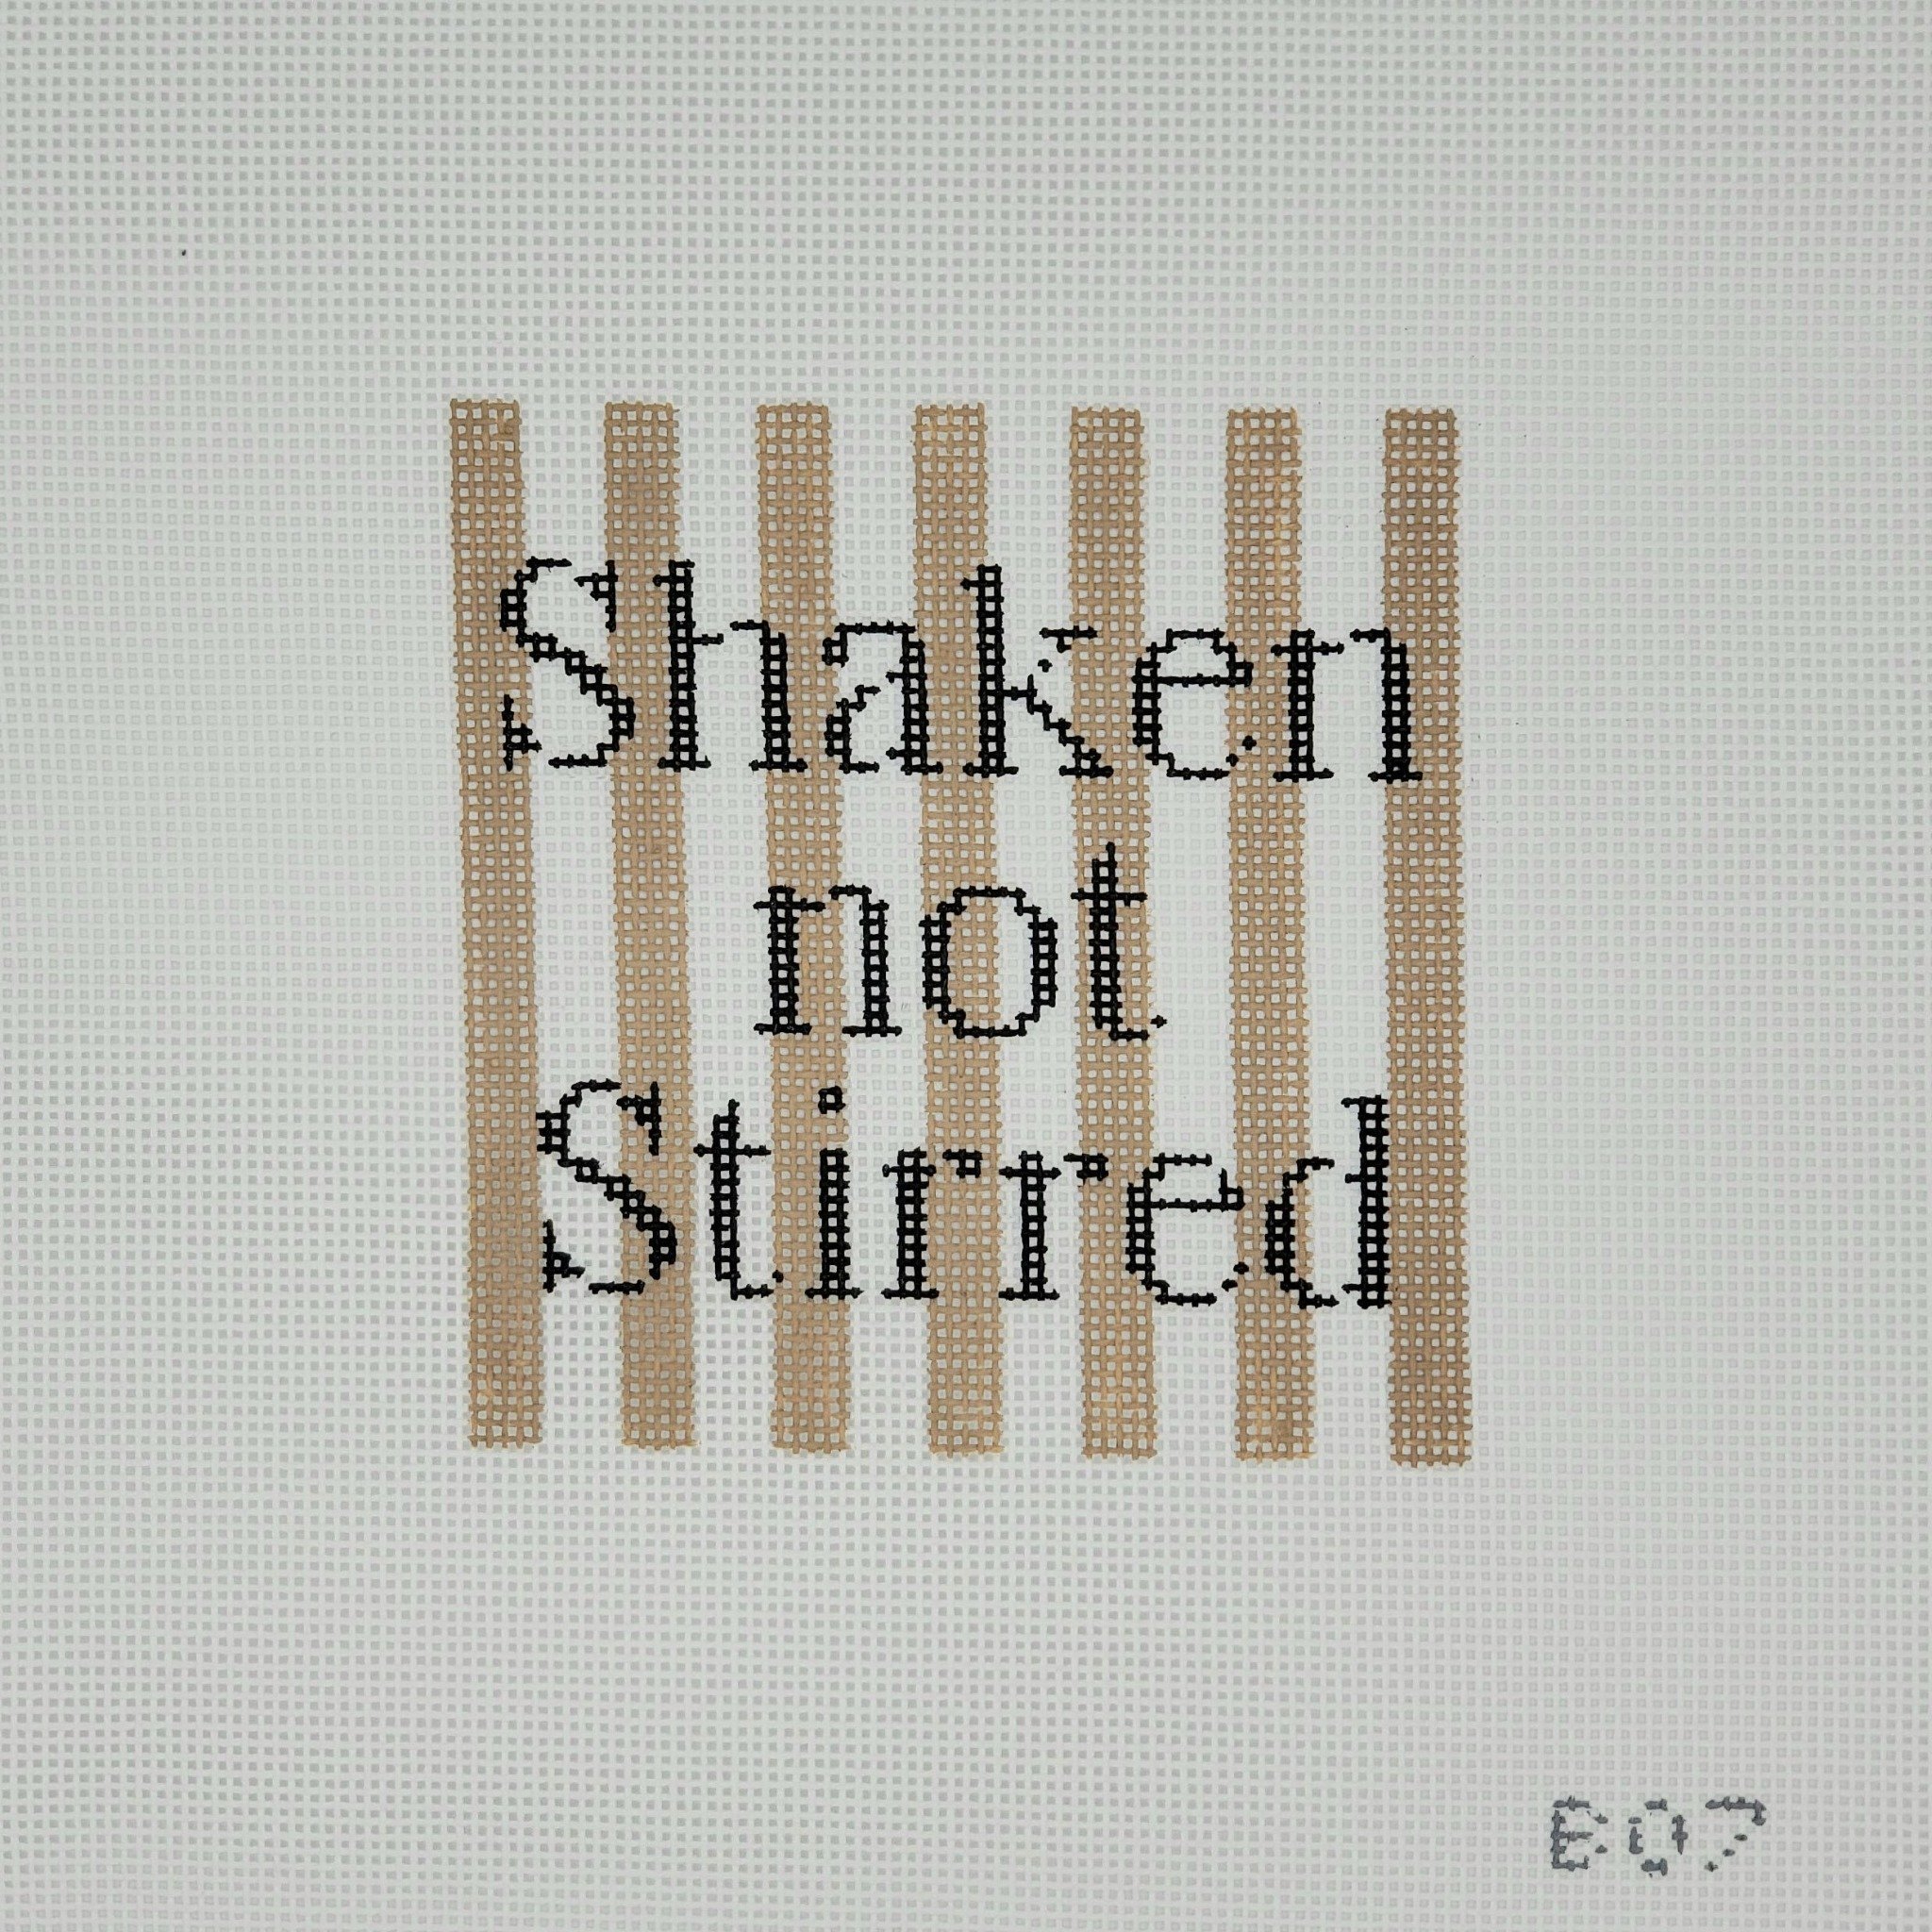 Shaken not Stirred